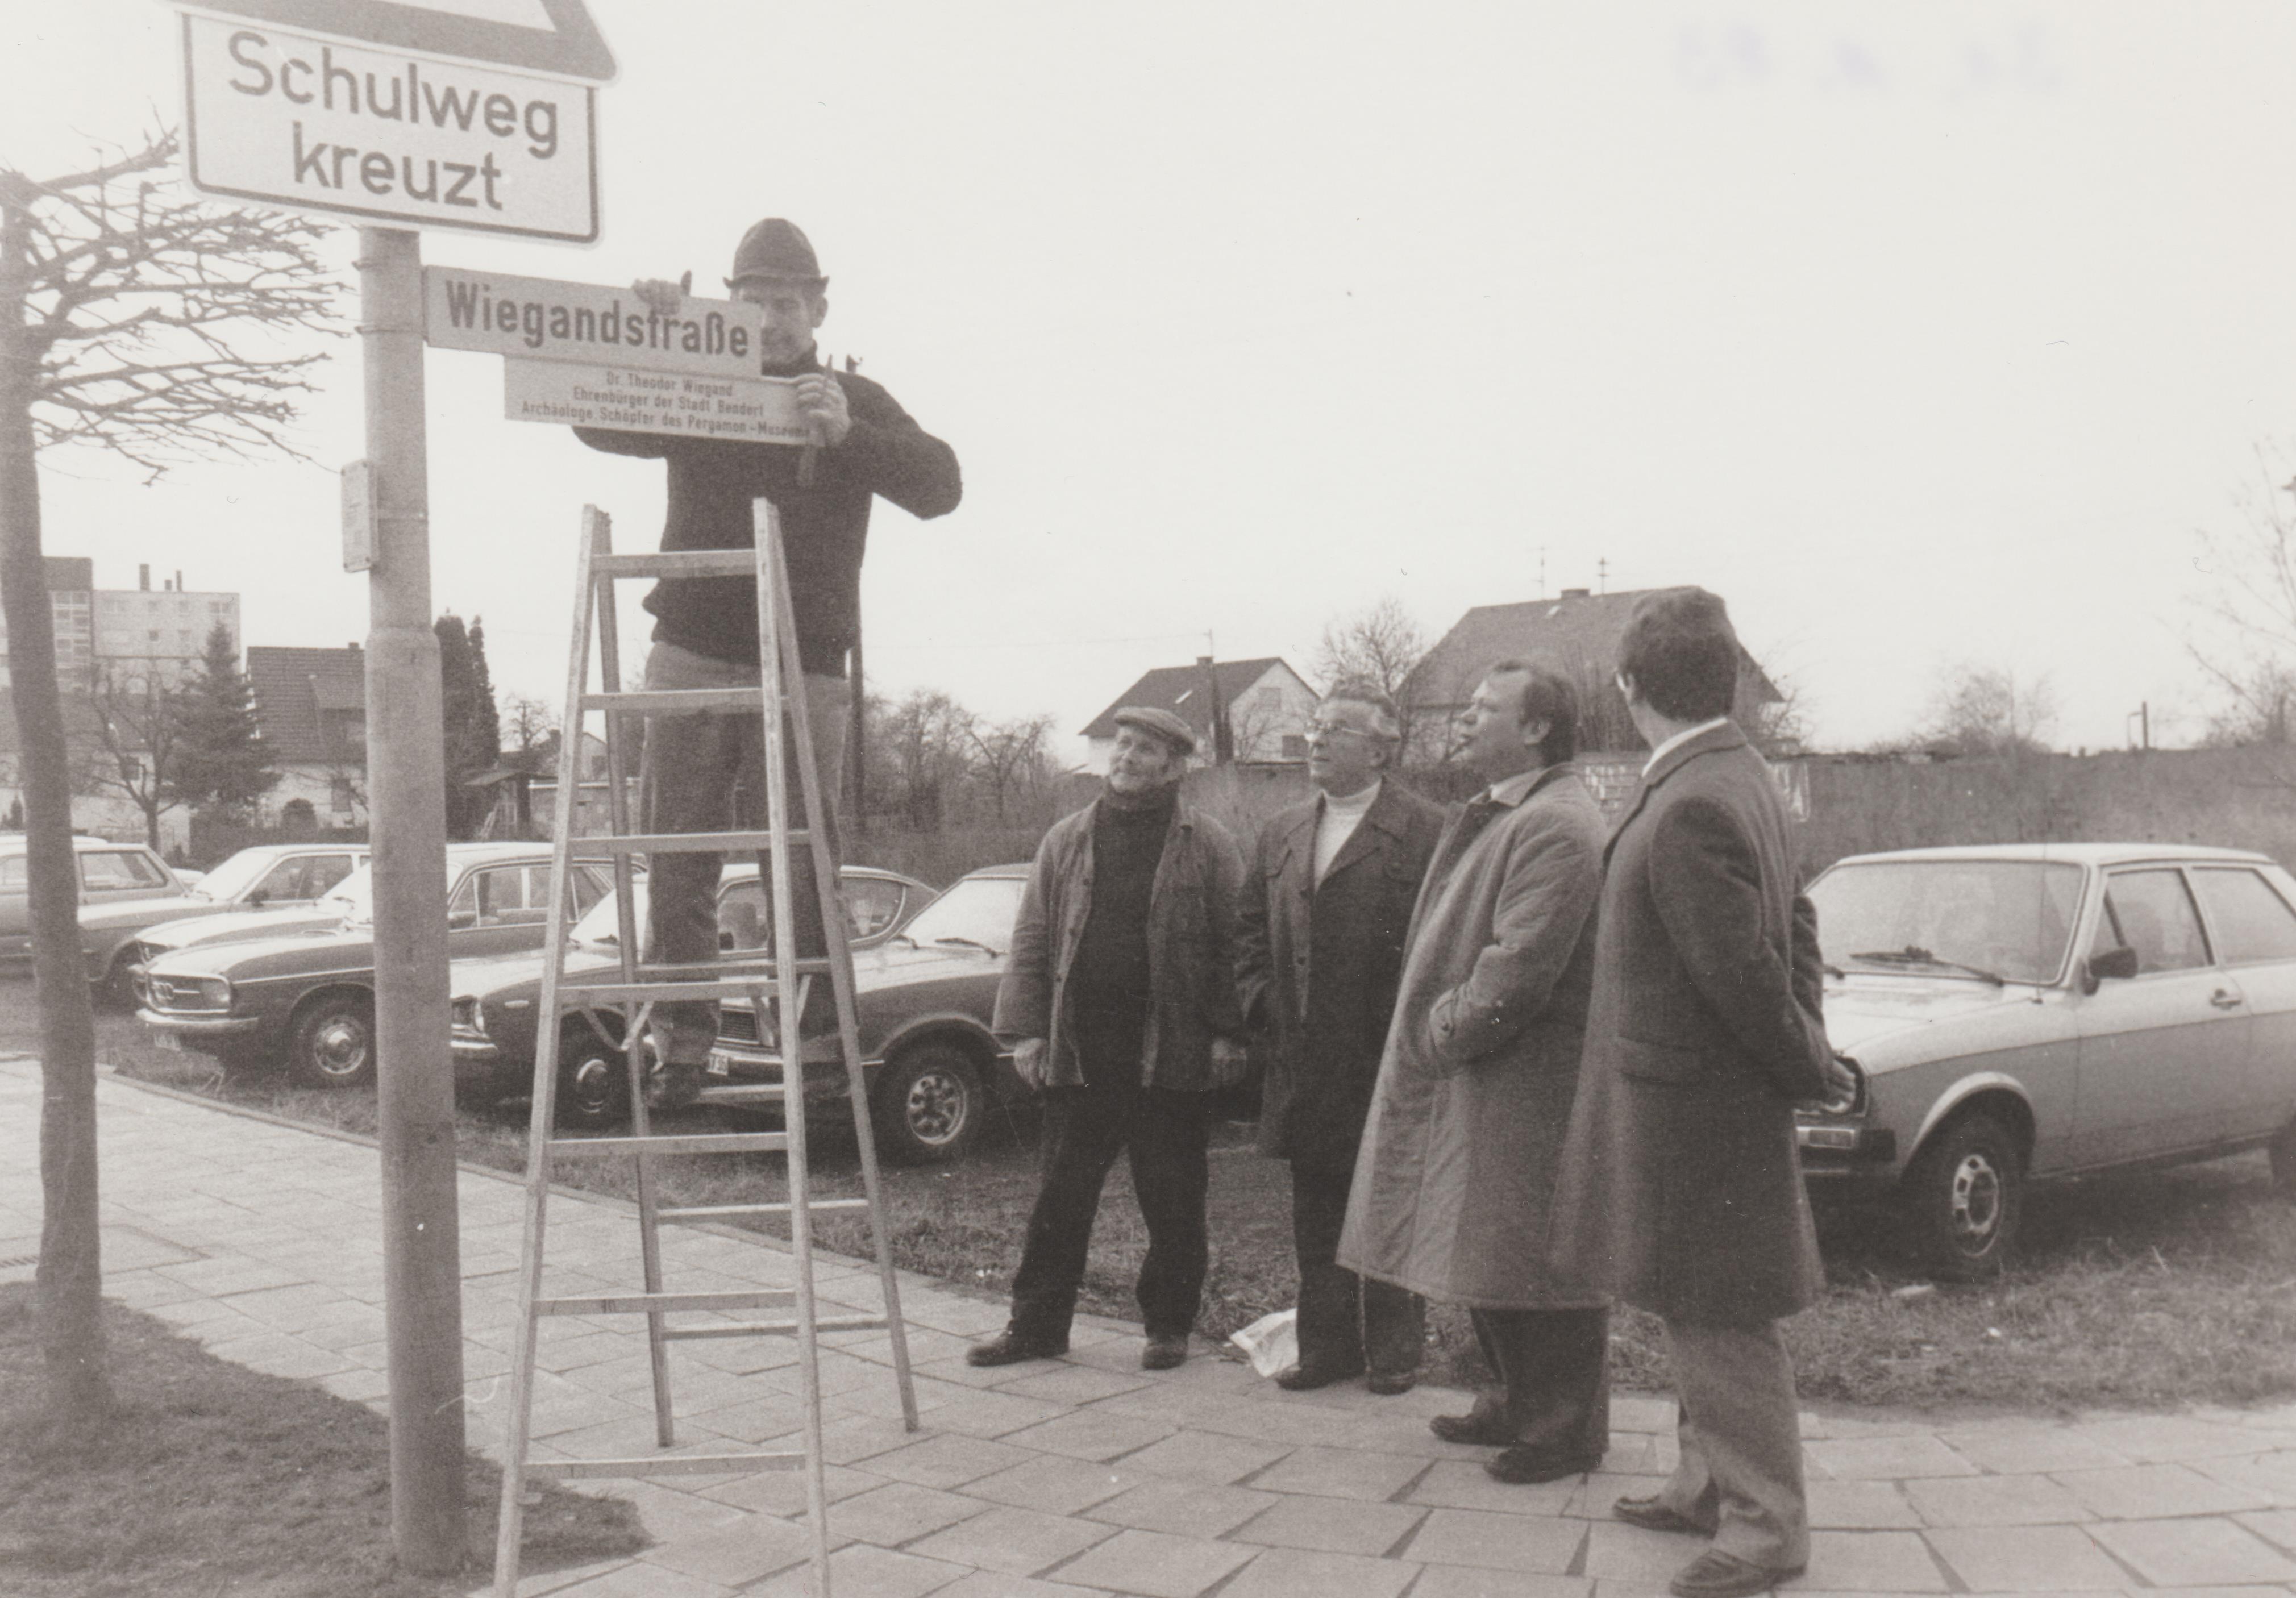 Bendorf Wiegandstraße, 1983 (REM CC BY-NC-SA)